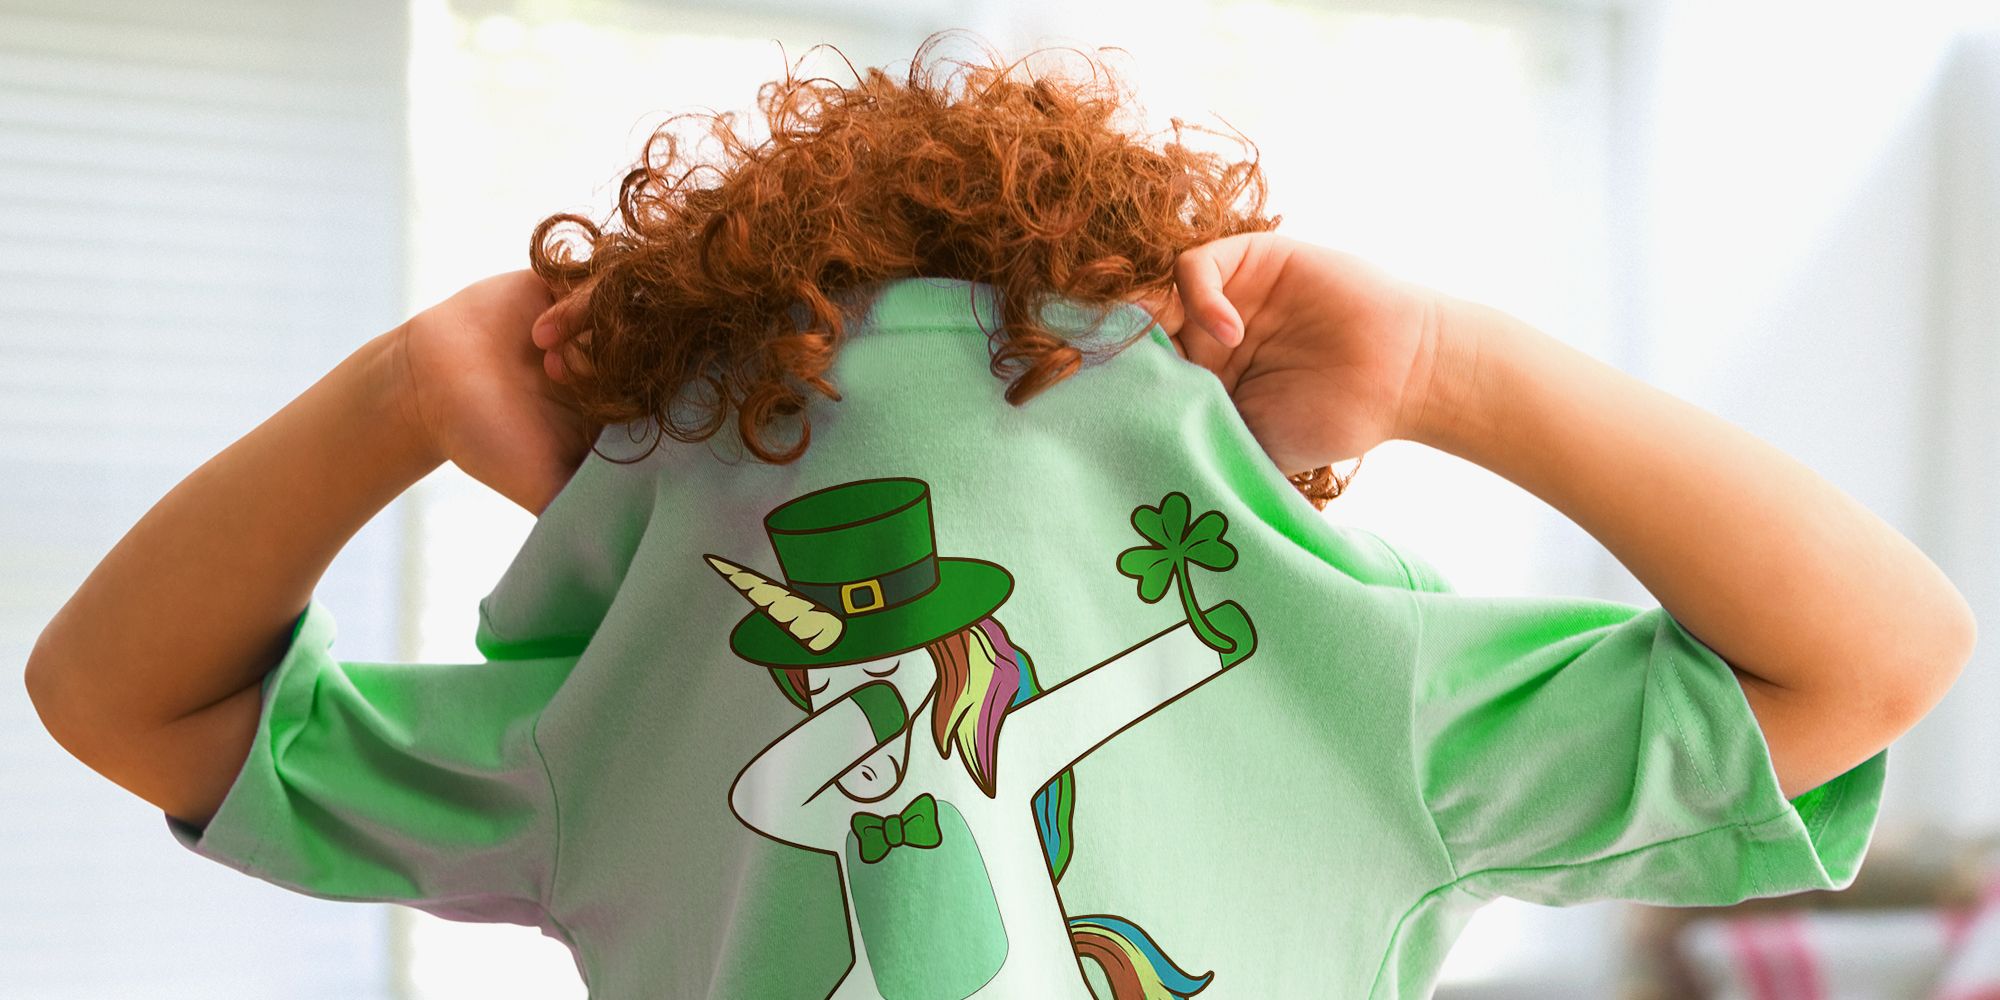 St Paddy's Day Shirt Irish Clover Shirt St Patrick Day Shirt Shamrock Heart Shirt Valentine Day Gift Patrick's Day Gifts